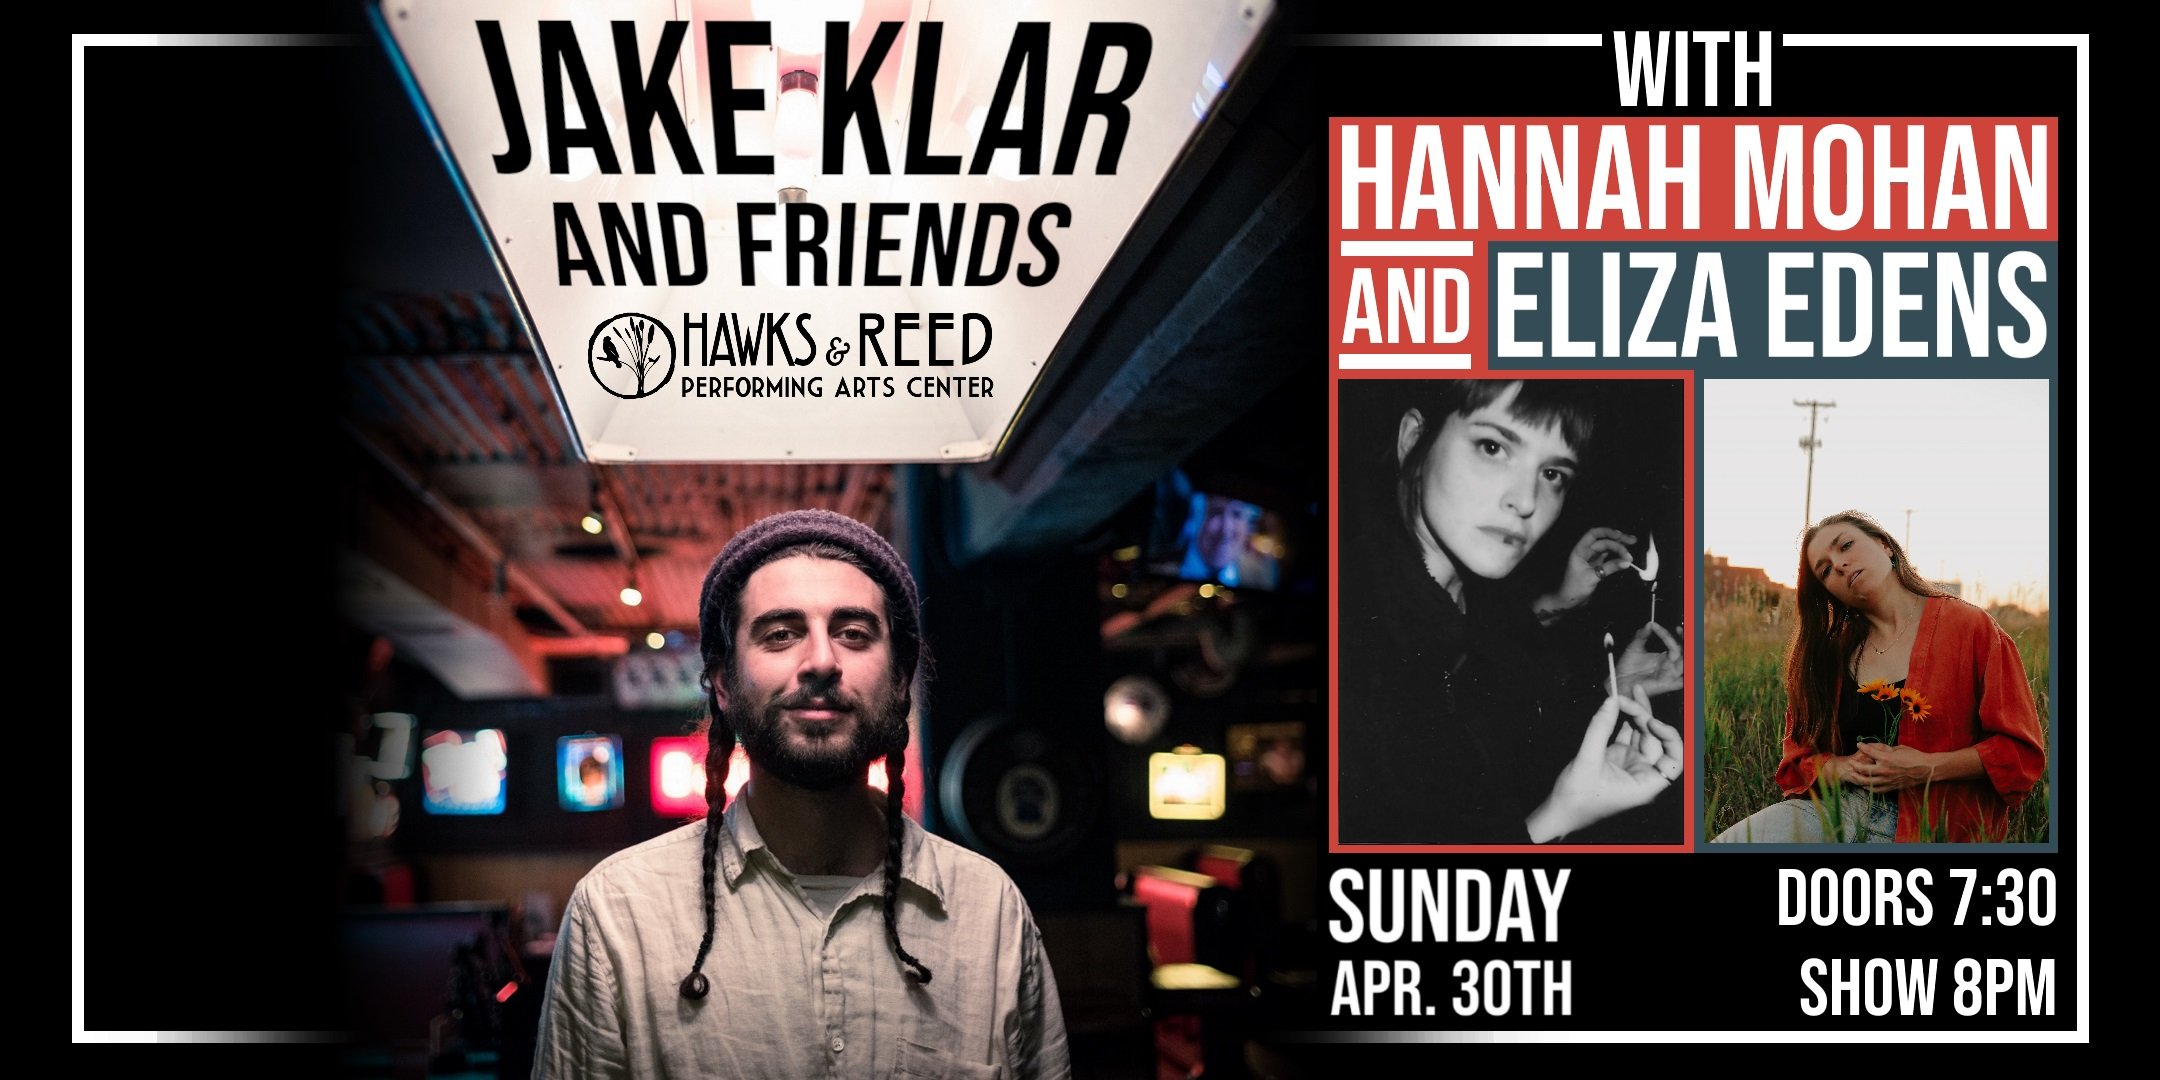 Jake Klar with Hannah Mohan and Eliza Edens at Hawks & Reed